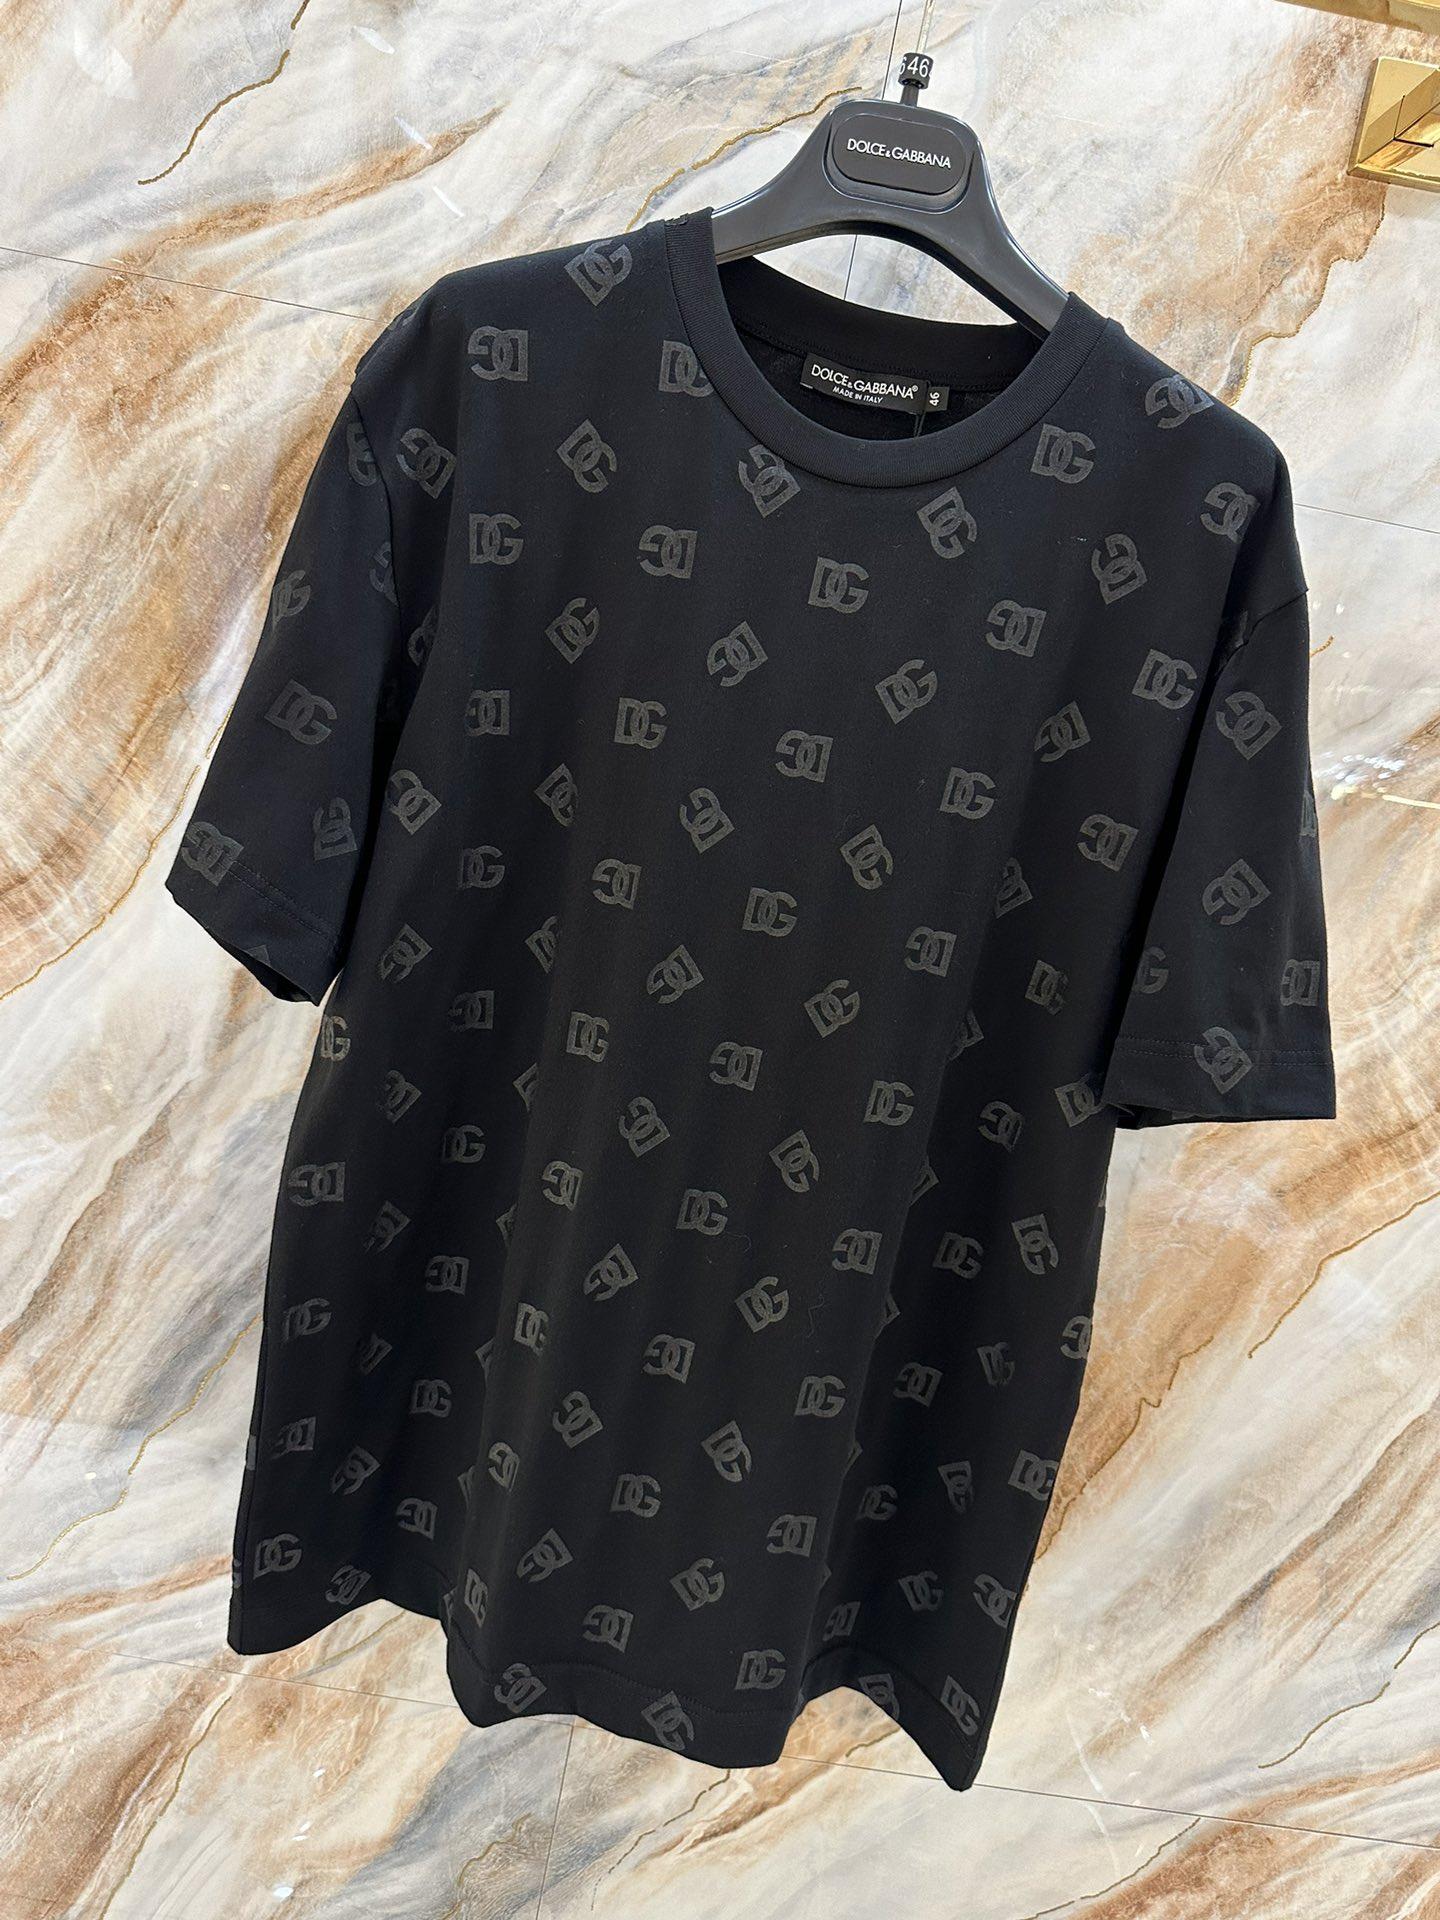 round-neck-t-shirt-with-dg-monogram-print-7187_16845020743-1000